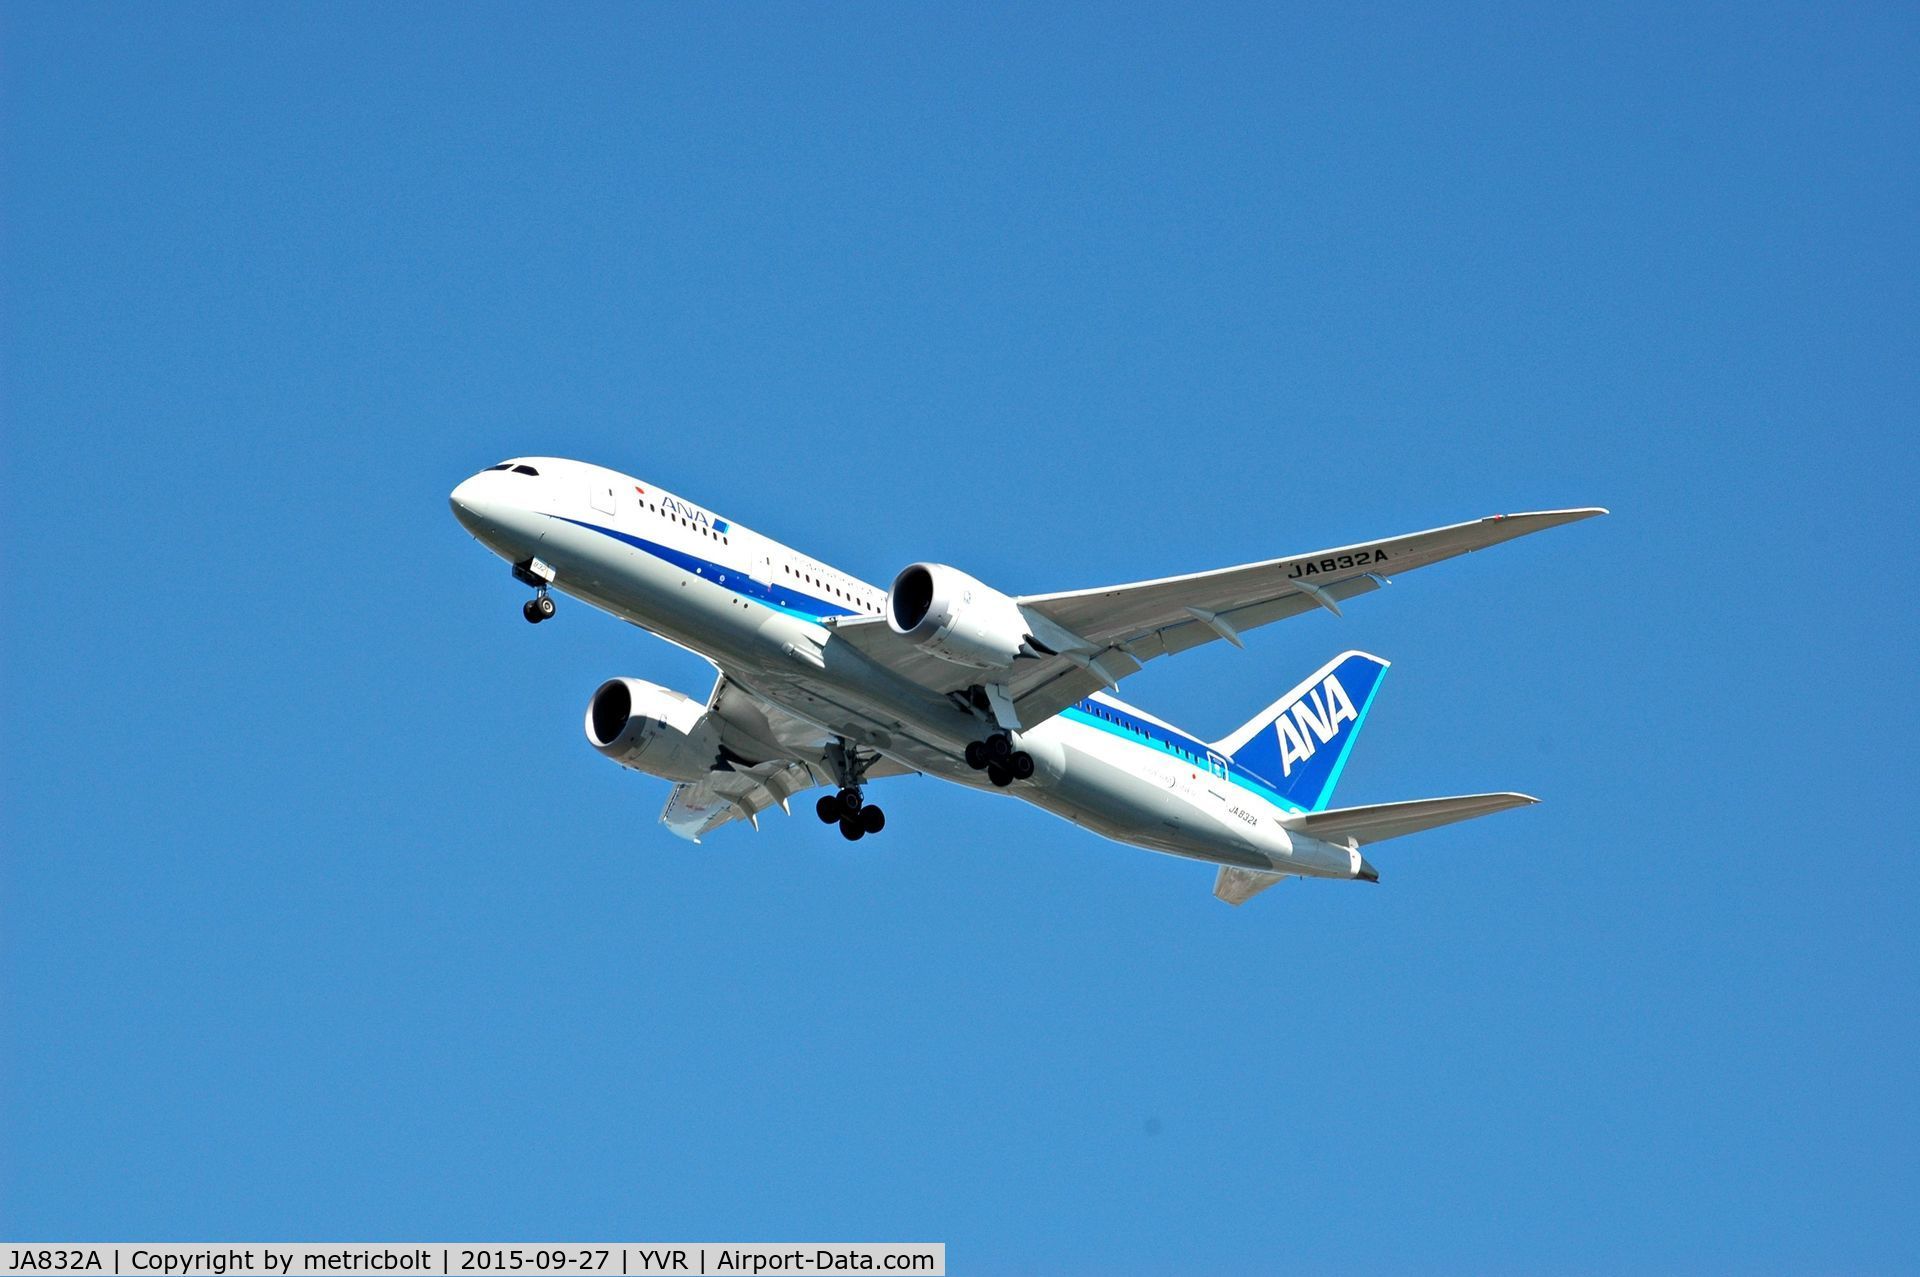 JA832A, 2014 Boeing 787-8 Dreamliner C/N 42249, NH116 from Narita